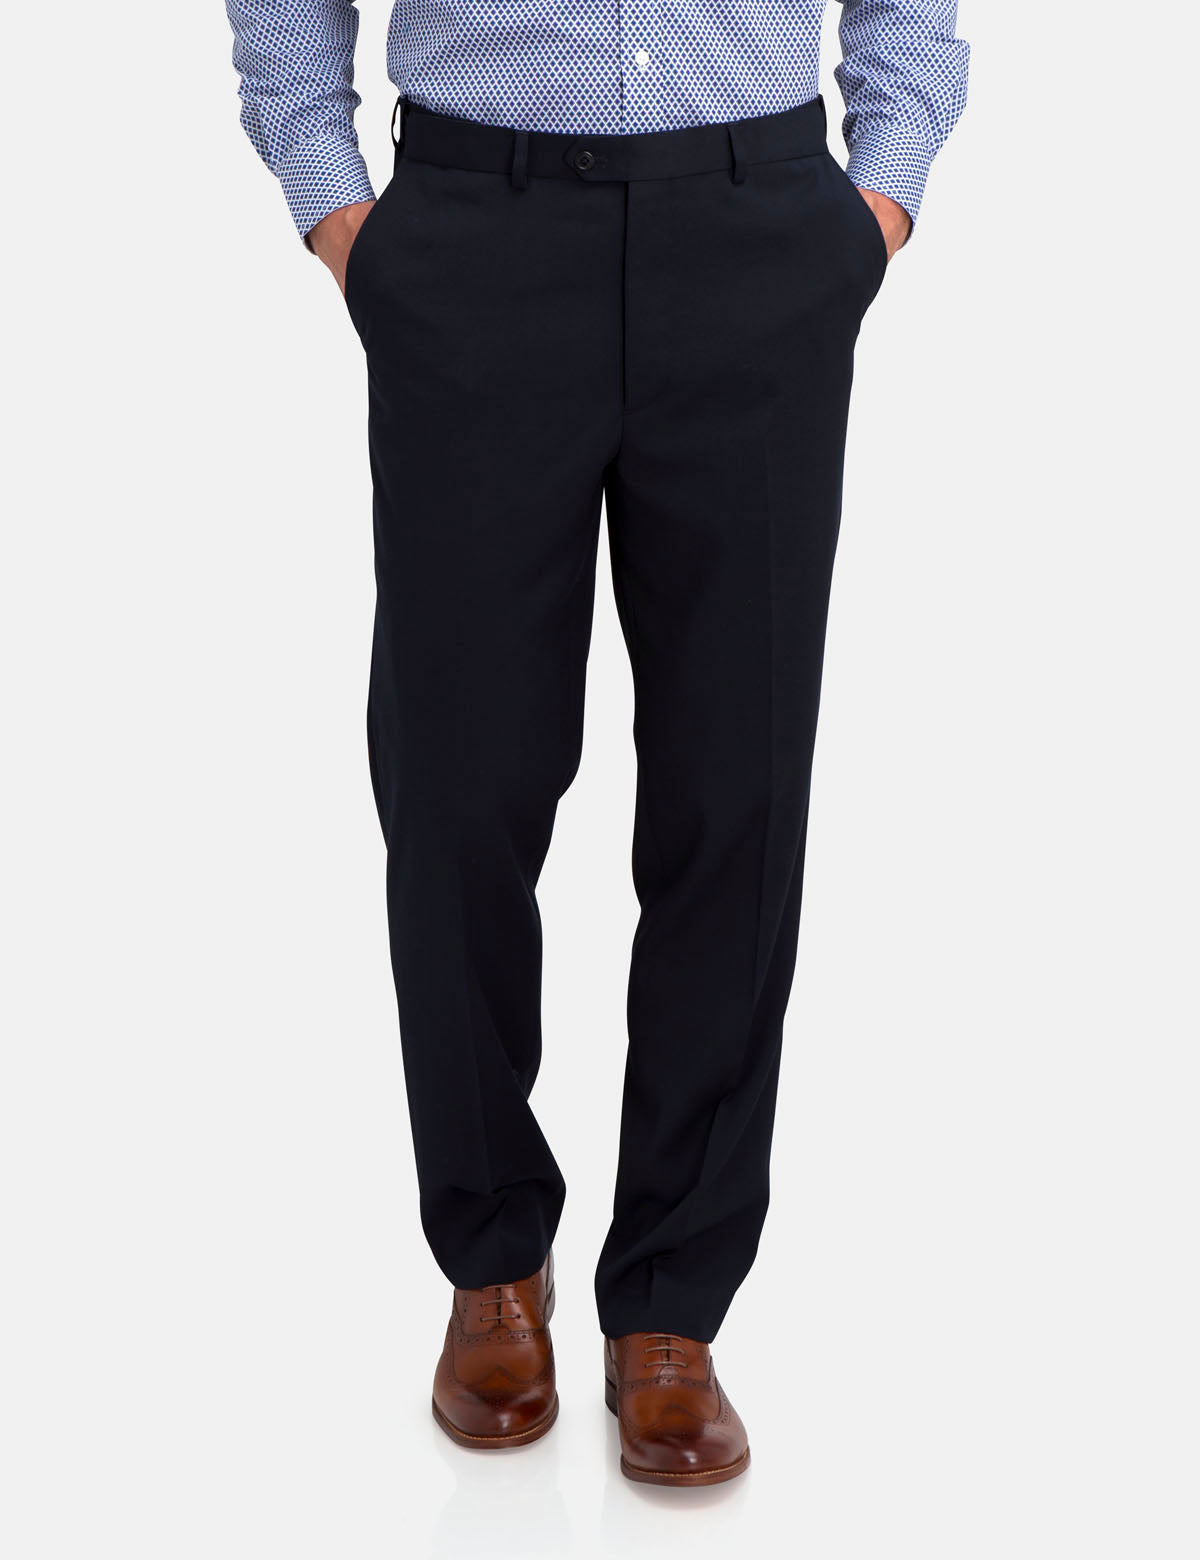 U.S. Polo Assn. Men's Flat Front Pant, Blue Stripe, 30Wx30L at Amazon Men's  Clothing store